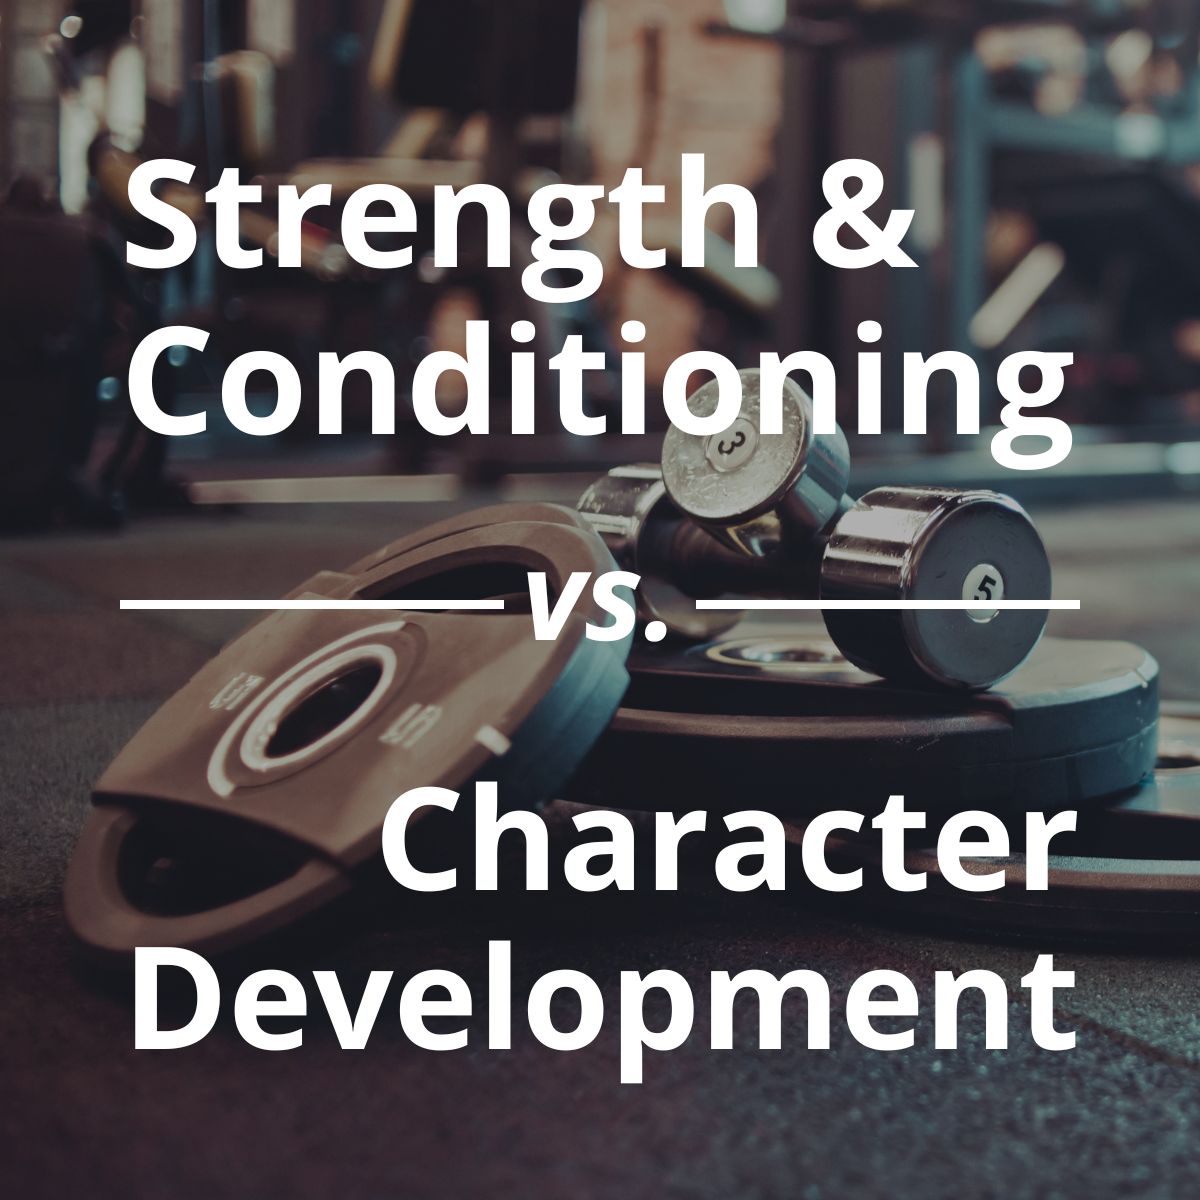 Strength & Conditioning vs. Character Development